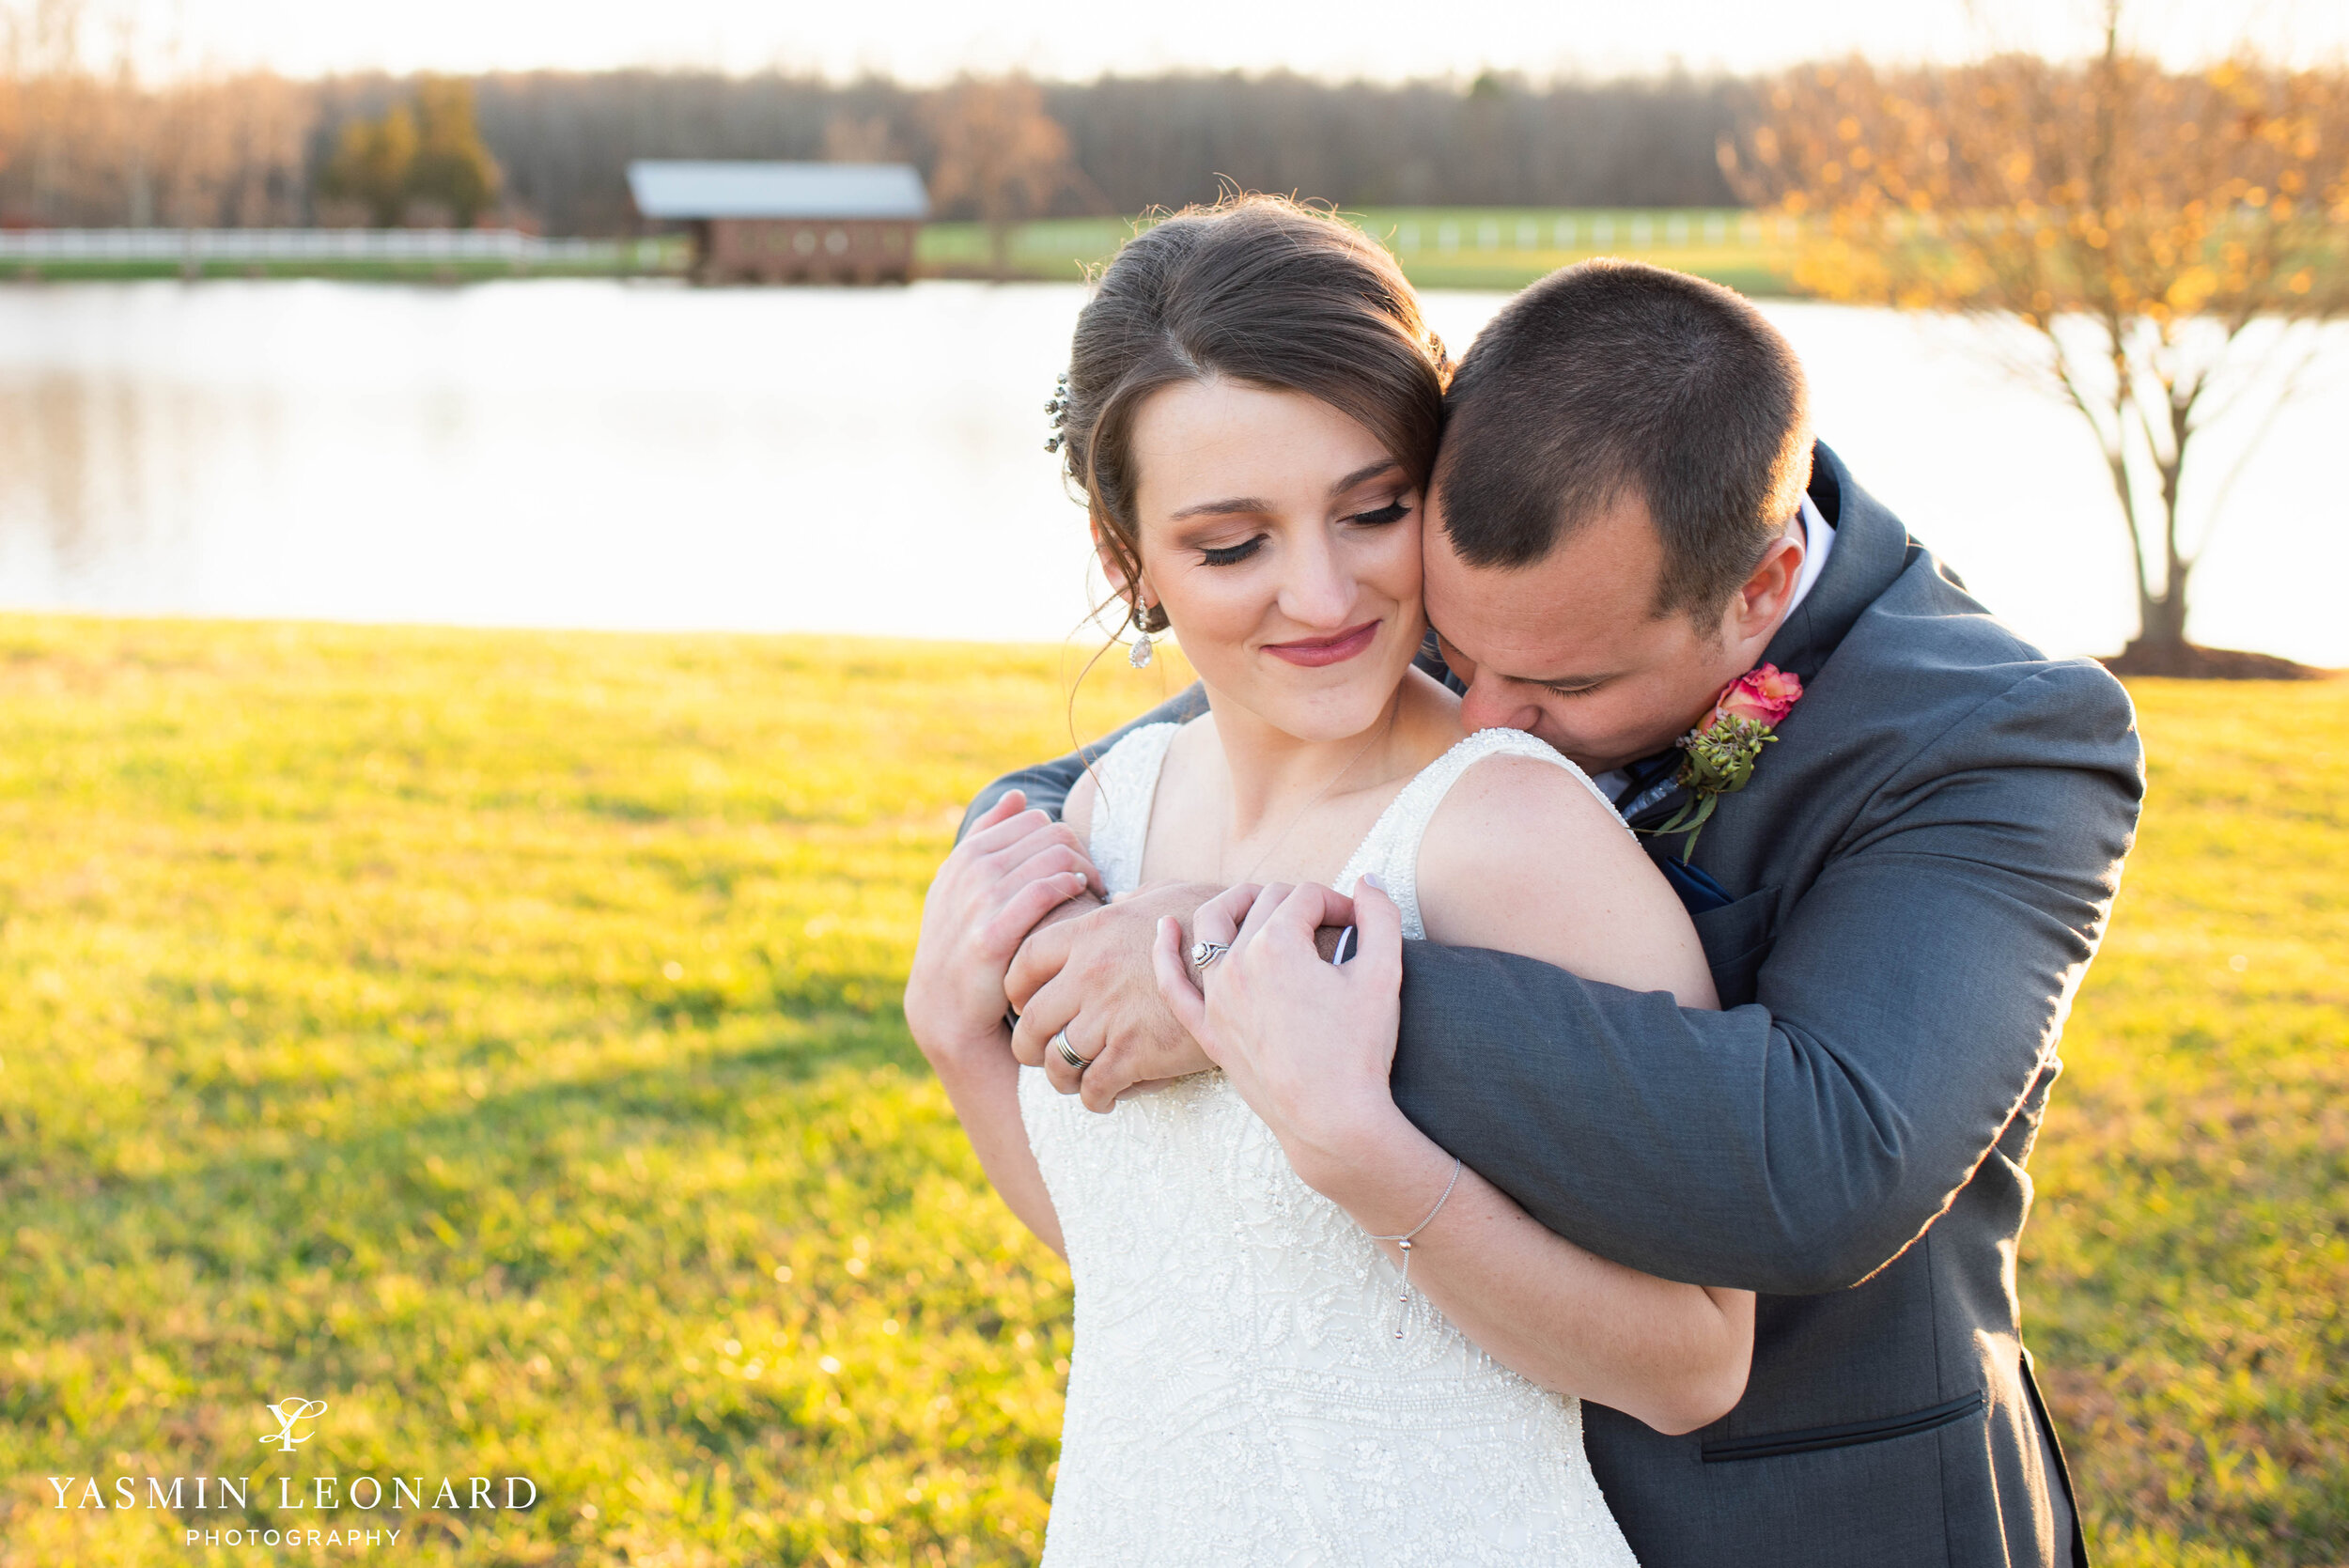 Jared and Katy - Adaumont Farms - High Point Weddings - NC Barn Weddings - Yasmin Leonard Photography-41.jpg